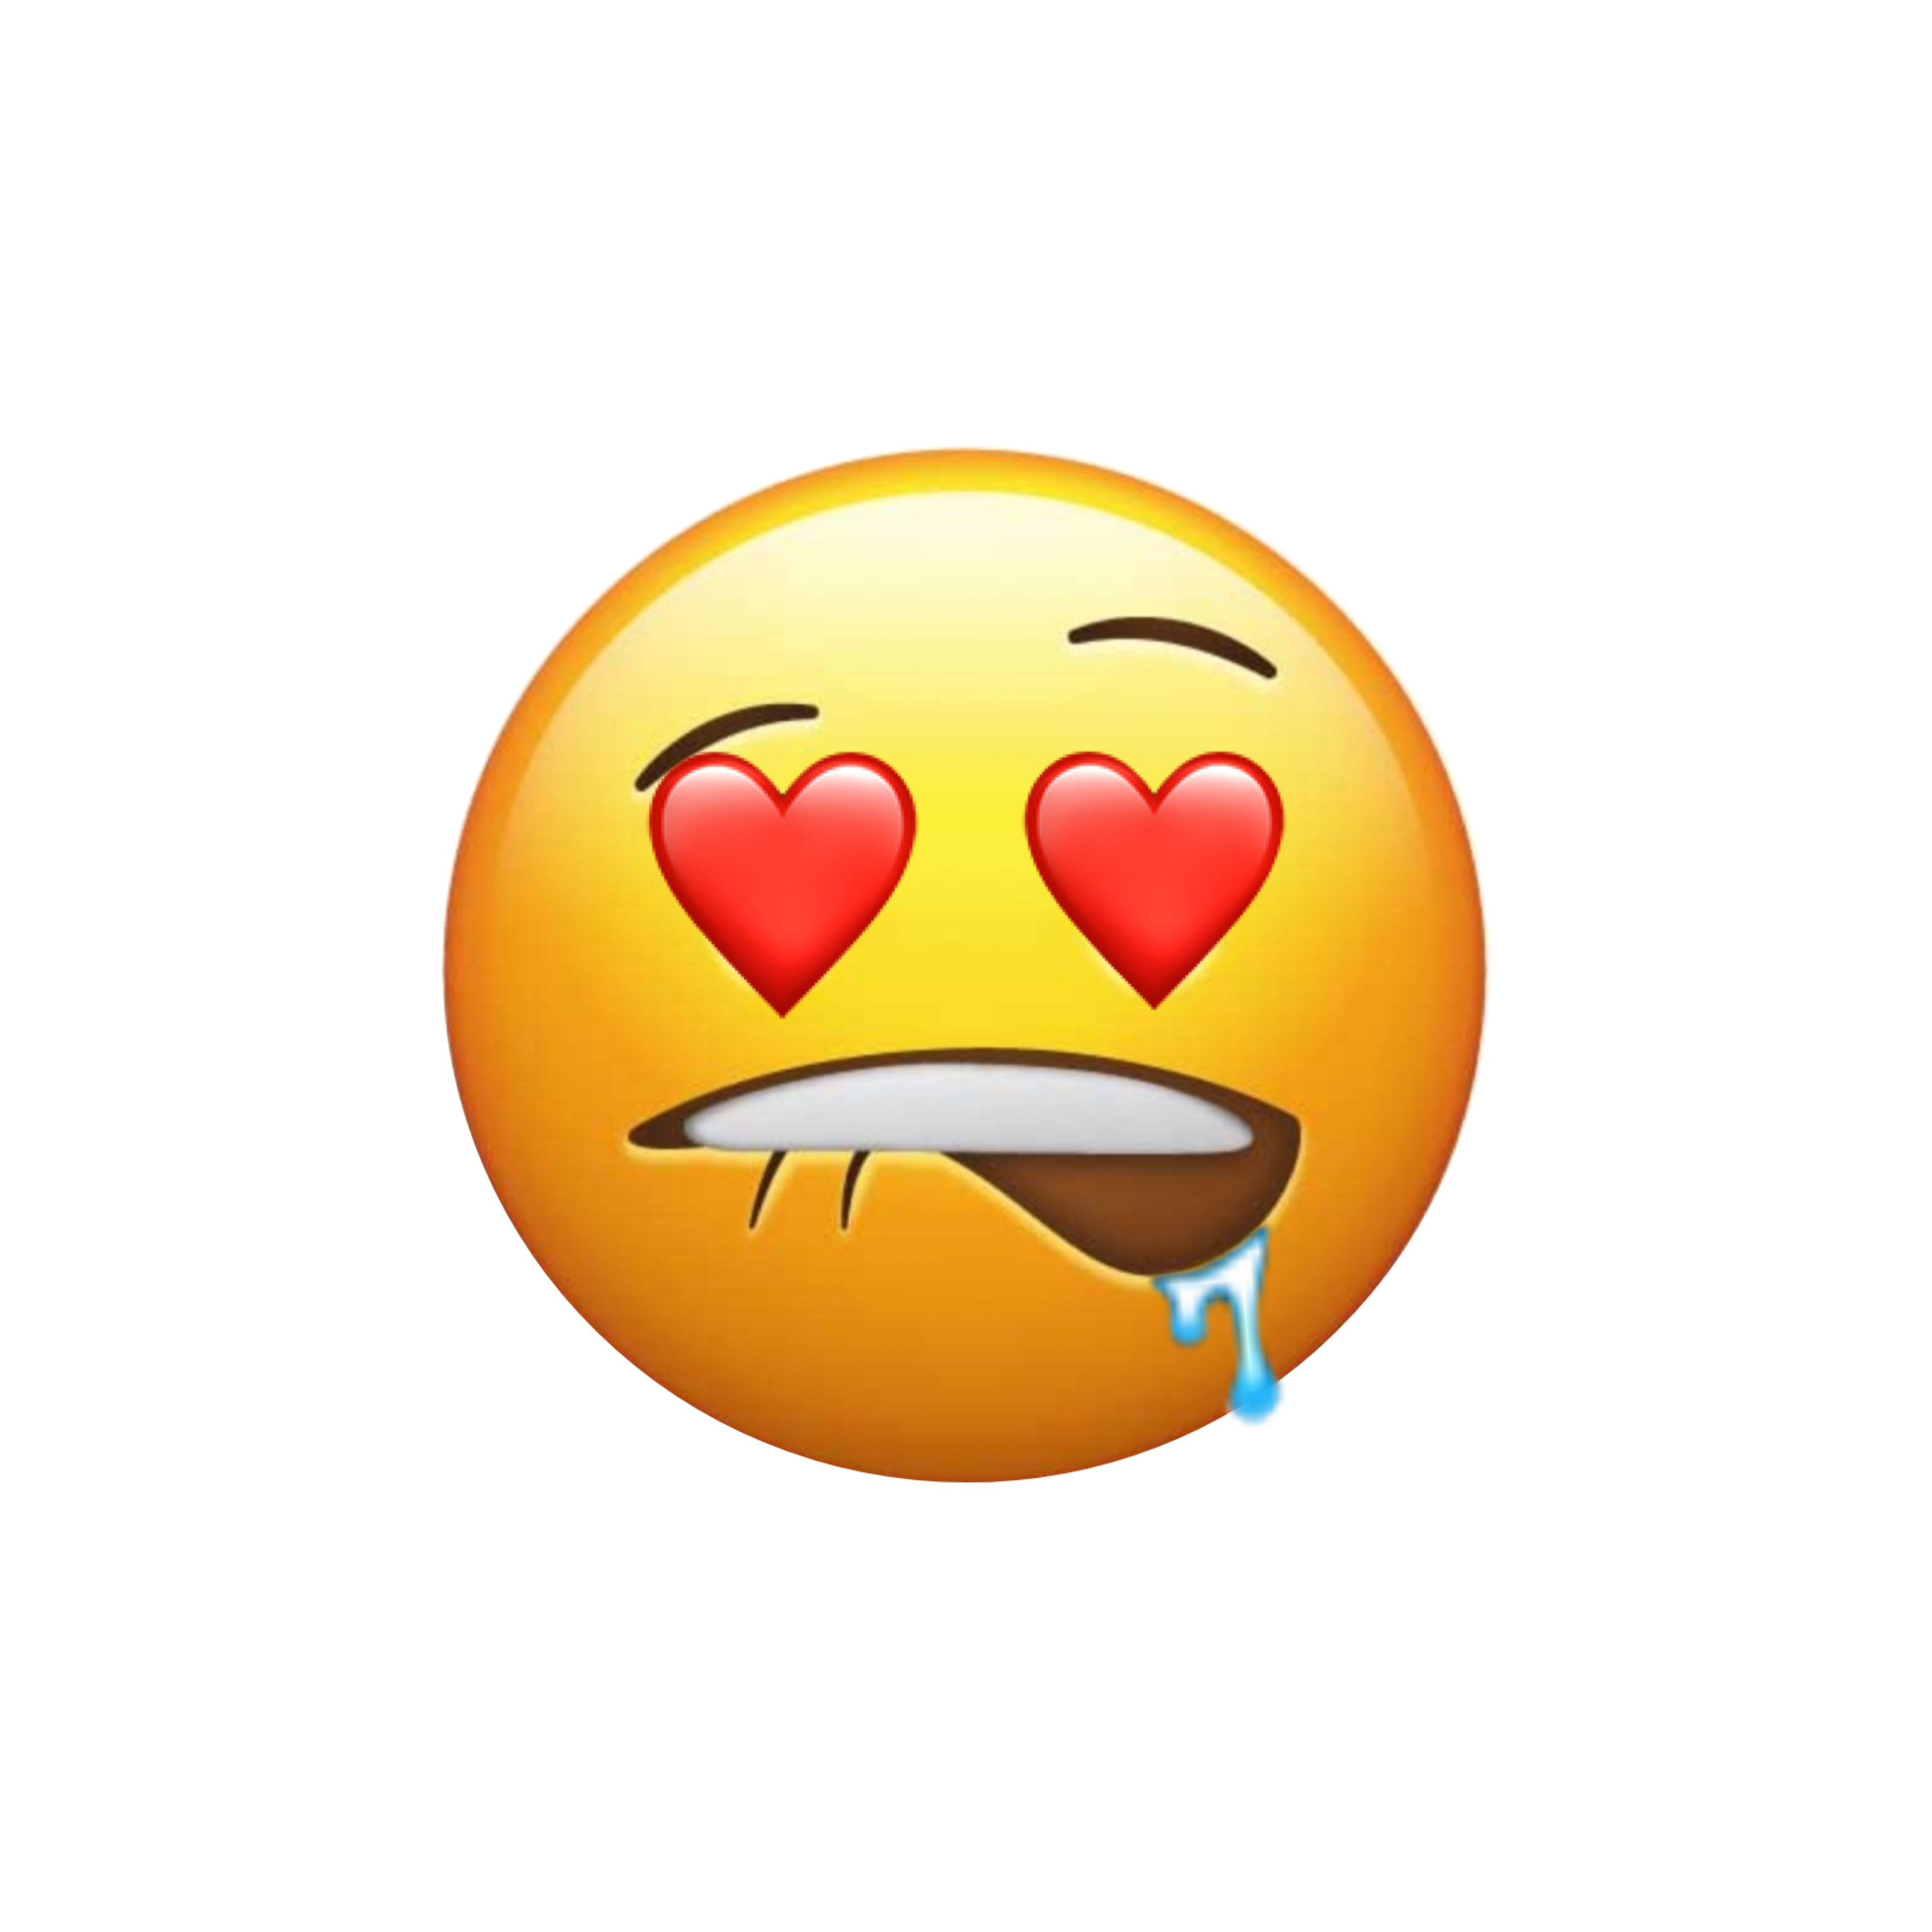 Lip Bite Emoji PNG HD Quality